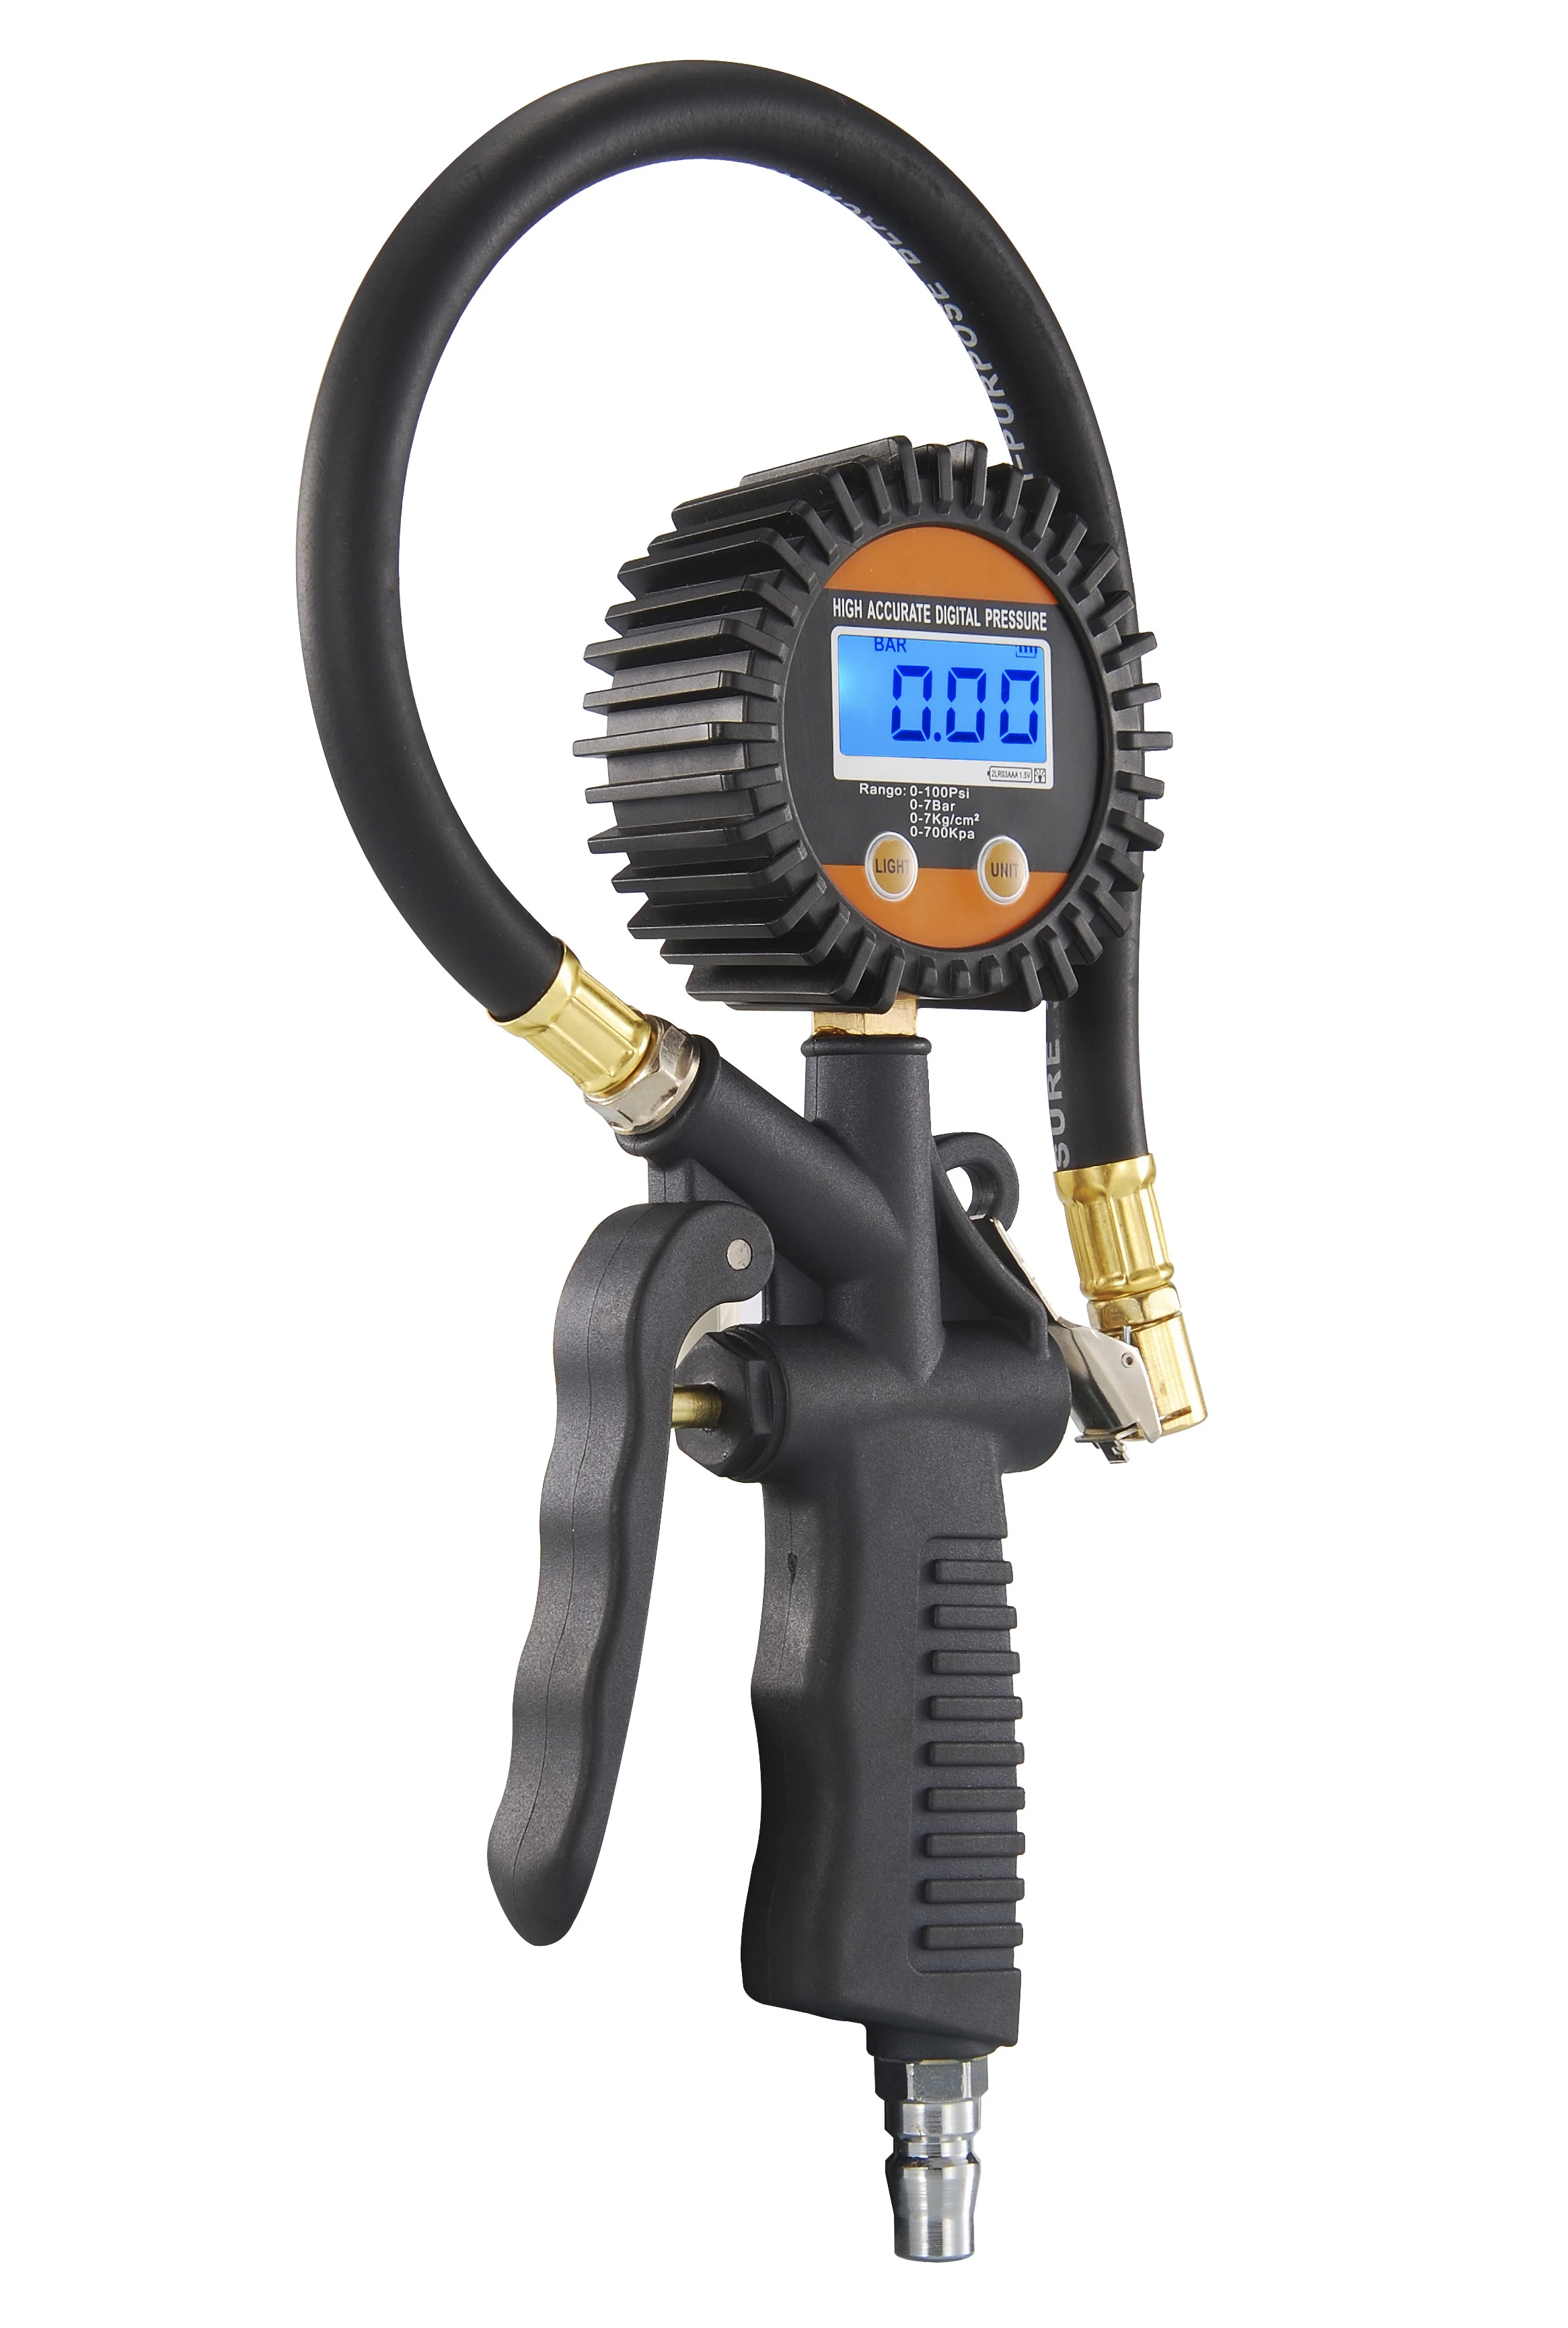 Air inflator automobile tire pressure gauge tire pressure gun